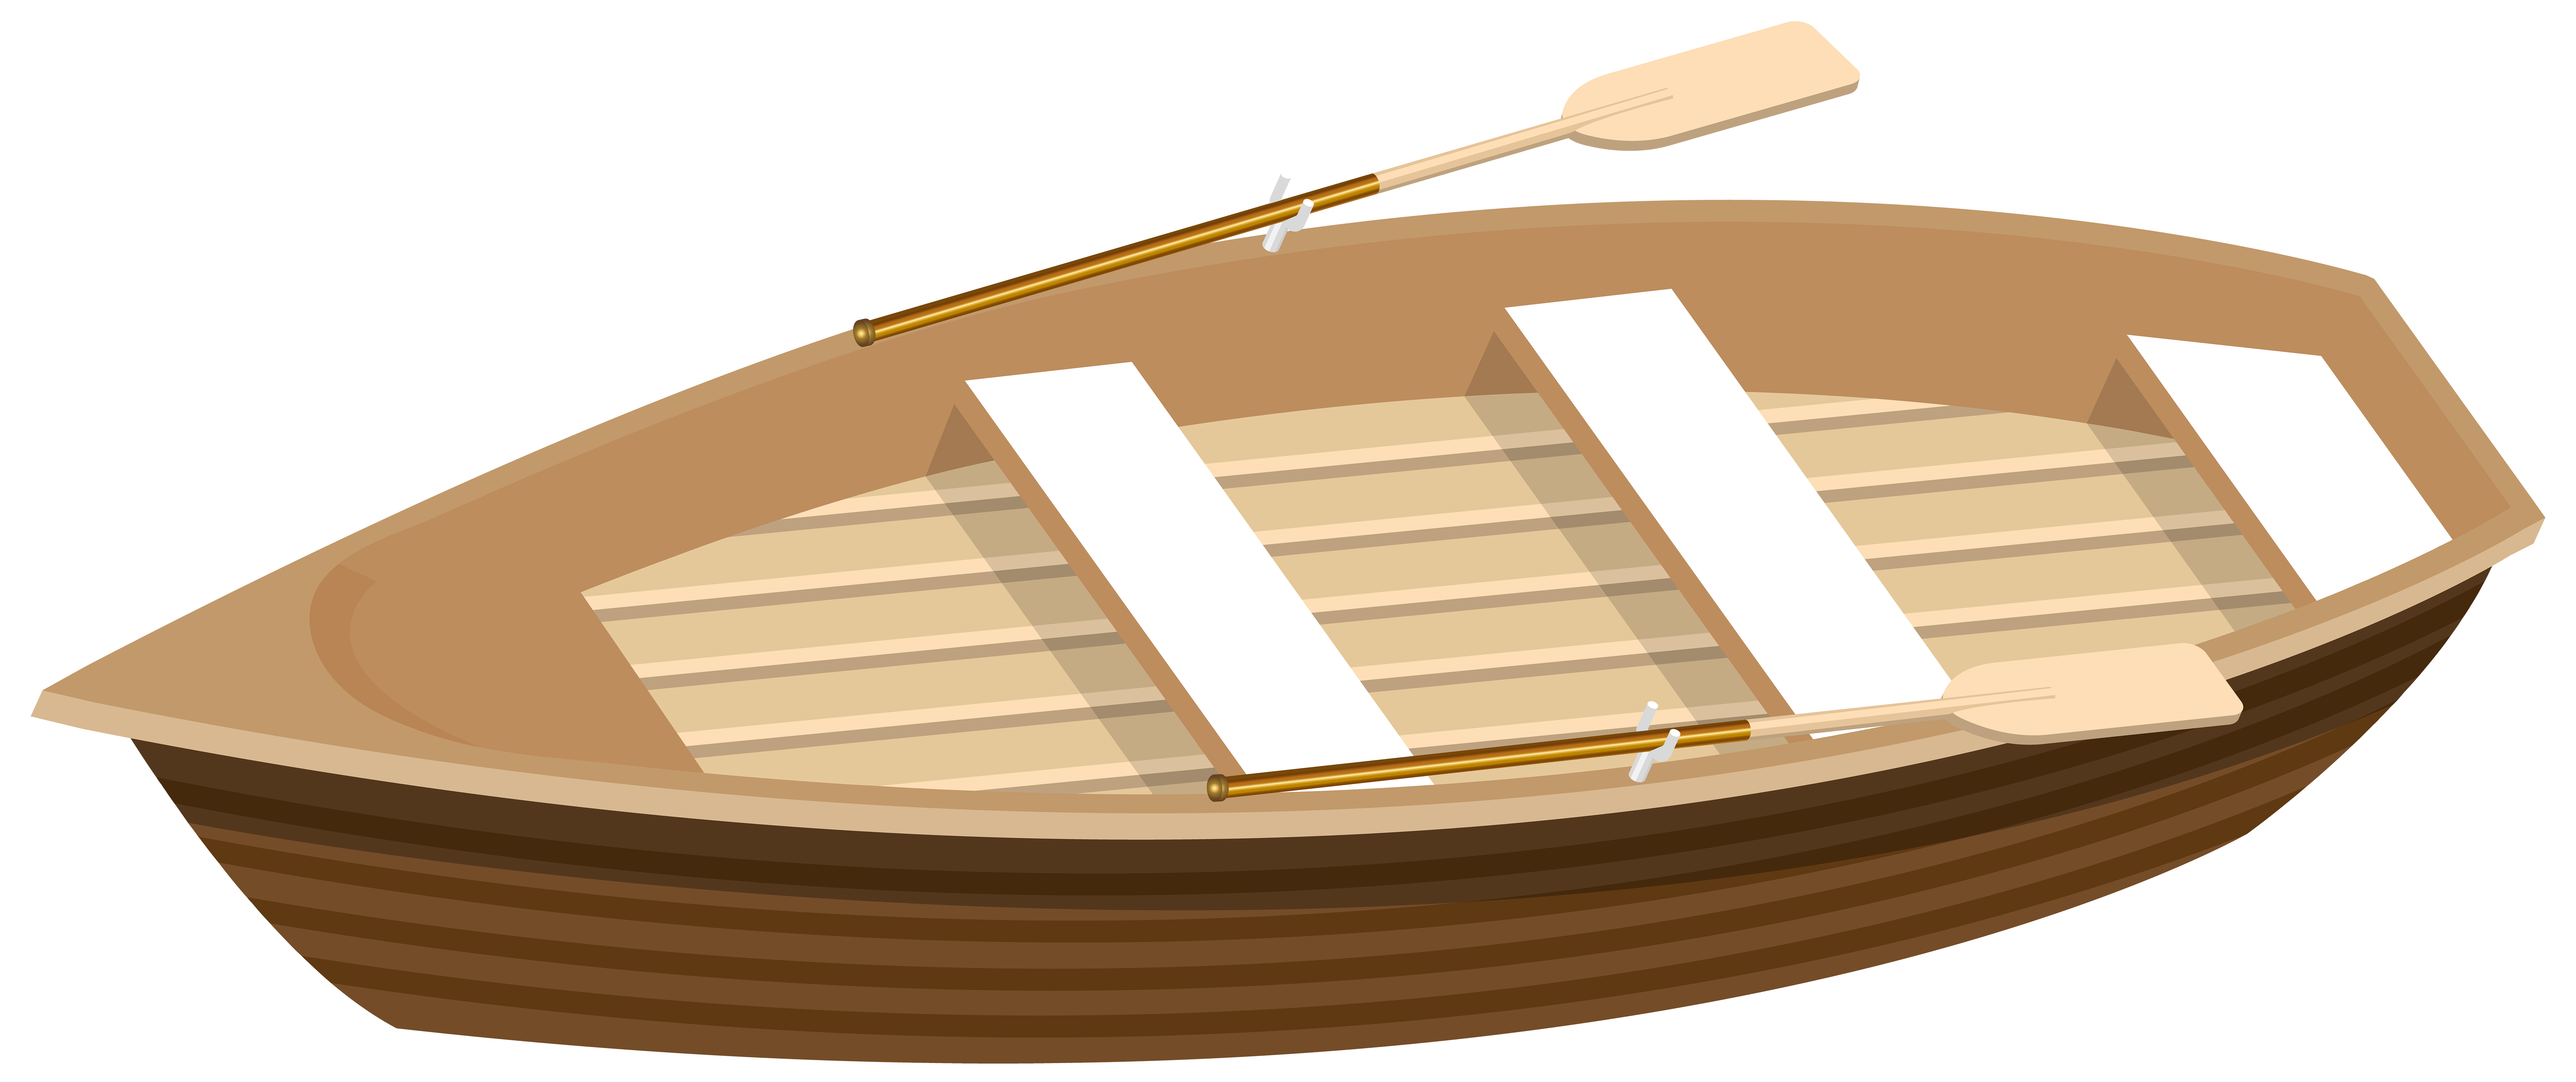 Wooden Boat Transparent PNG Clip Art Image